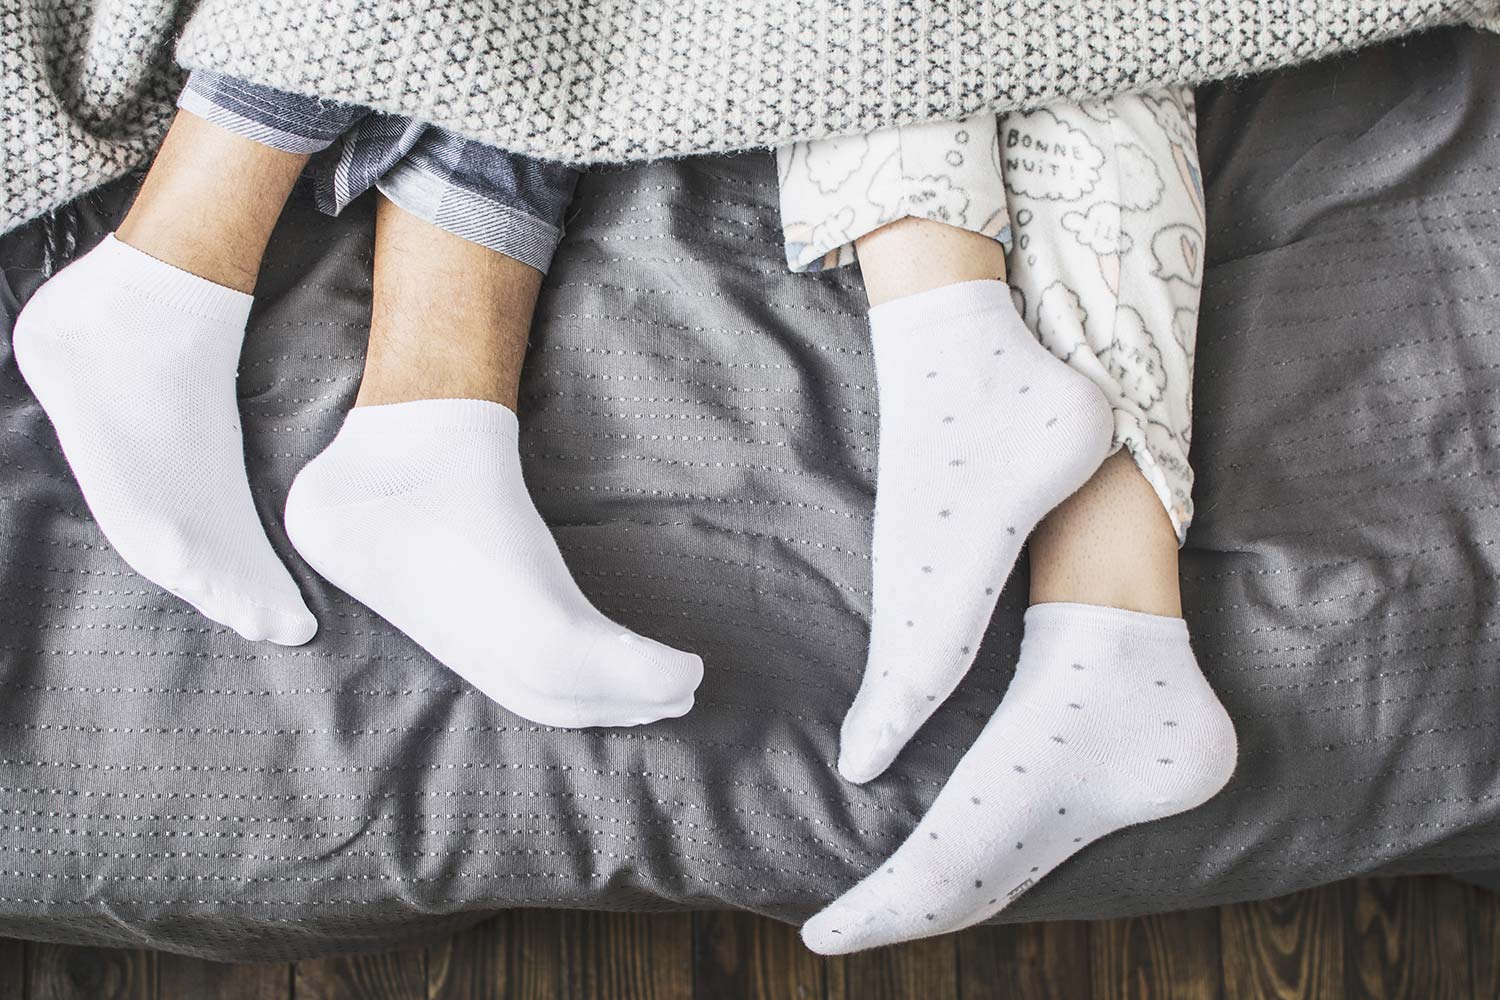 Sleeping With Socks On: Can It Help You Sleep? - Amerisleep